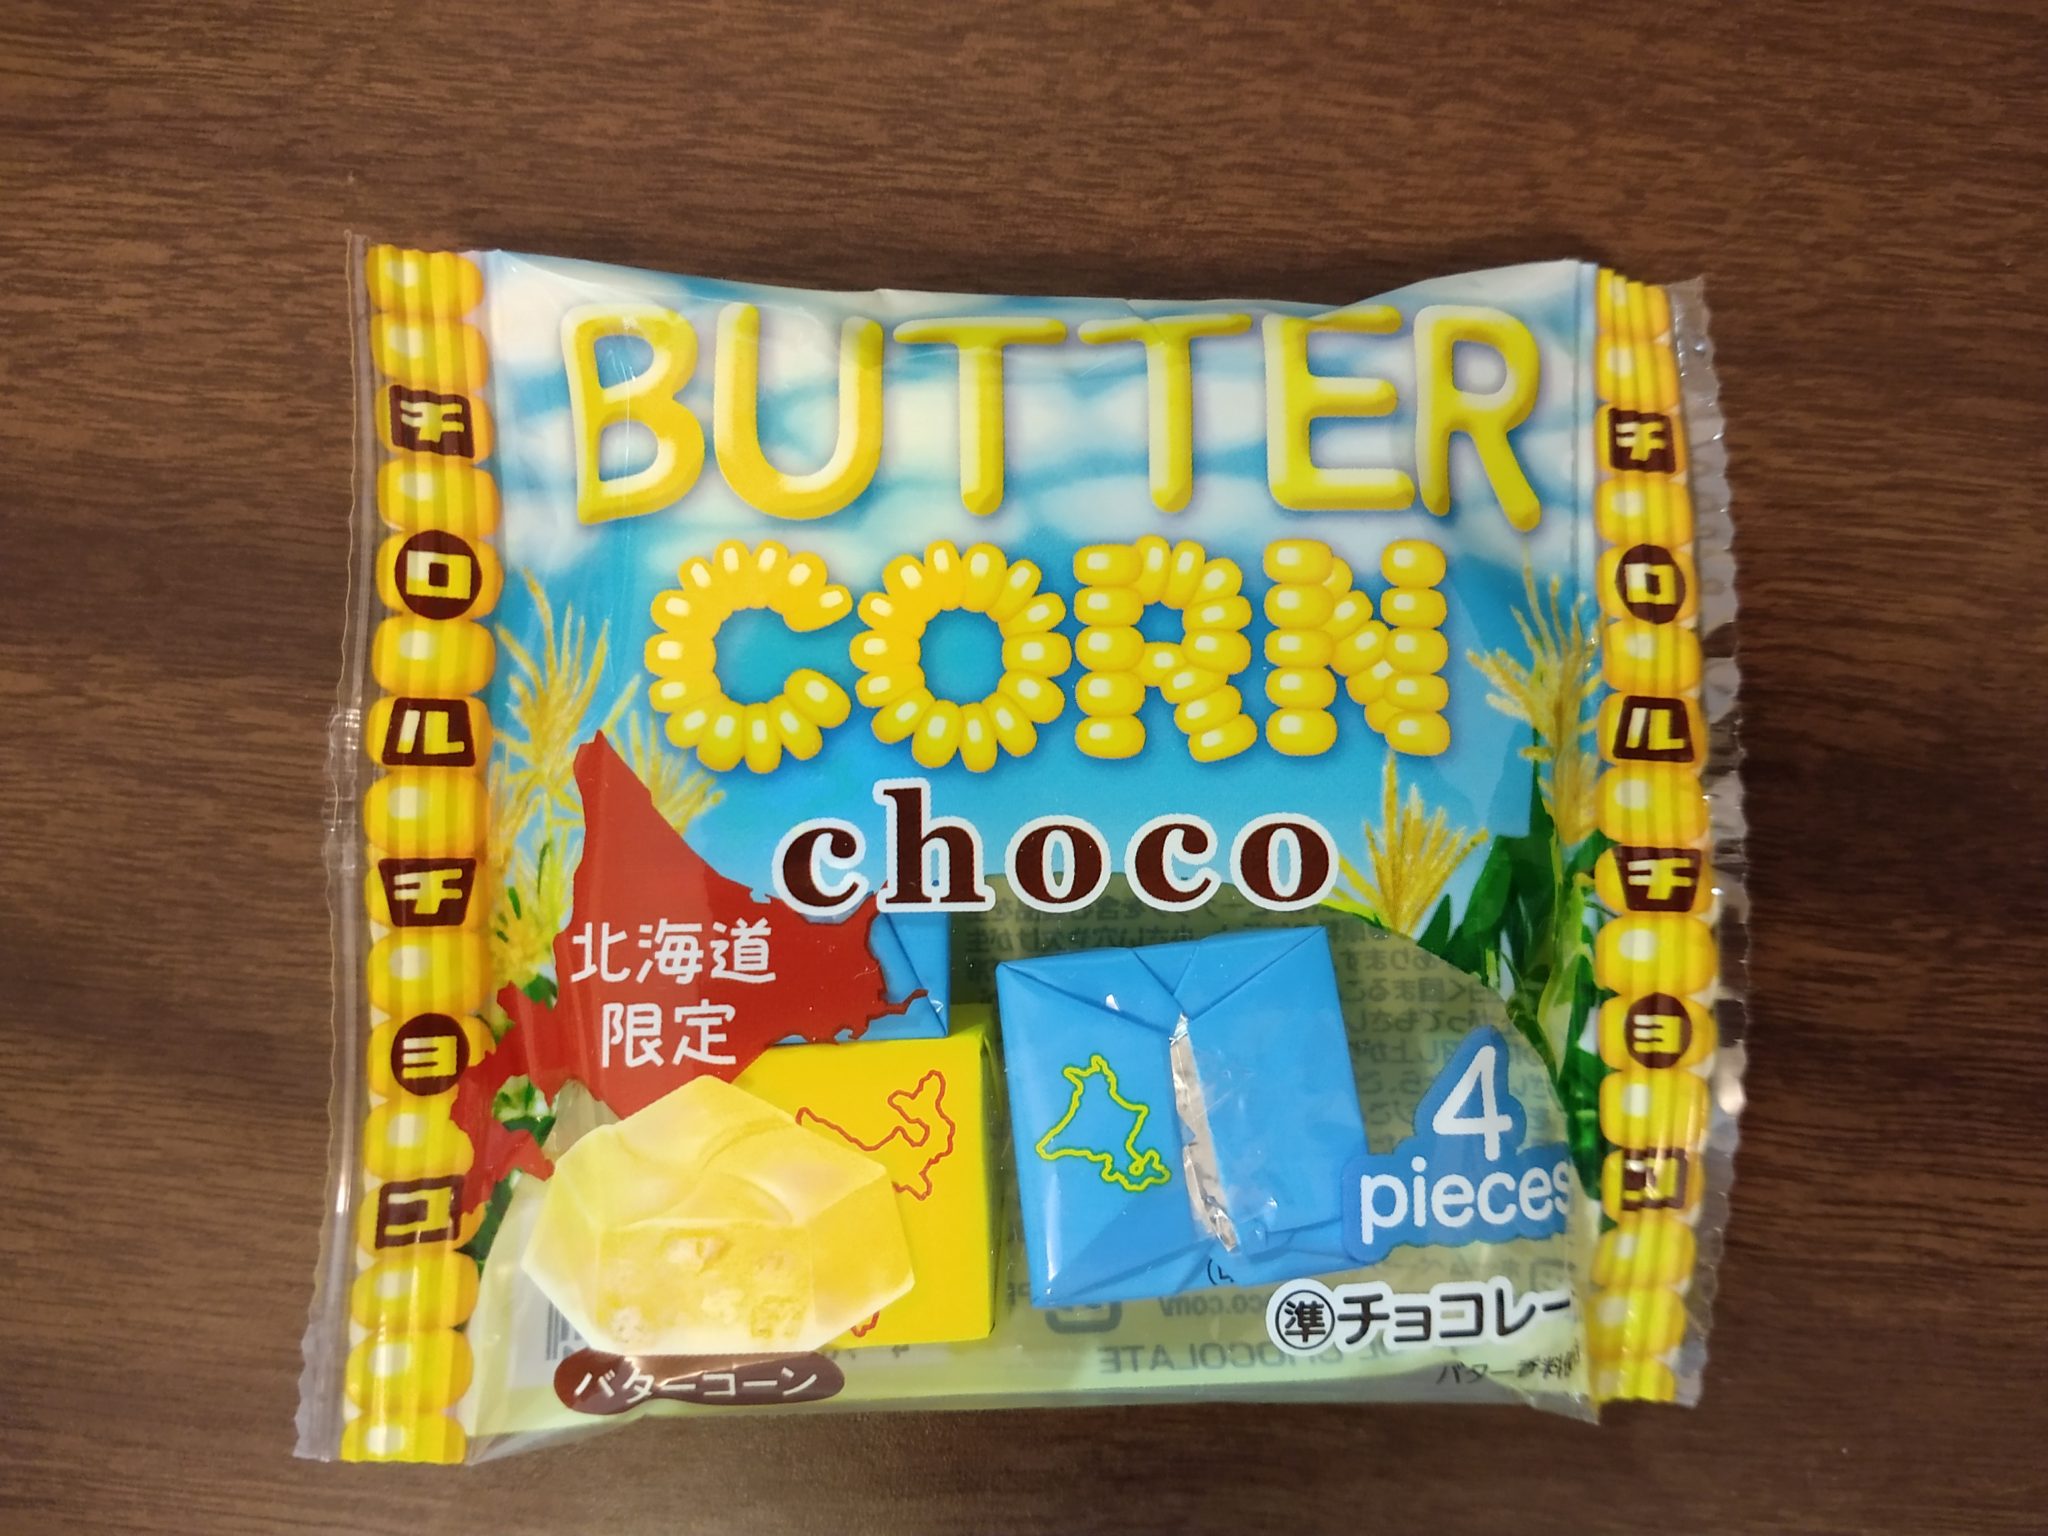 Tirol Chocolate – Butter Corn